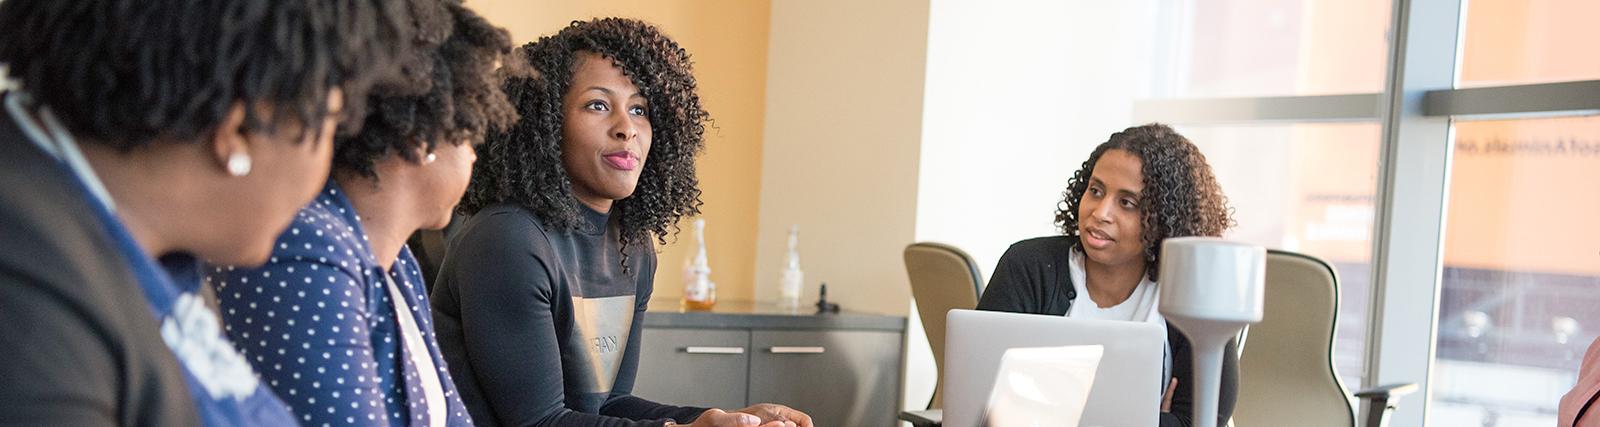 African America Women in corporate setting talking